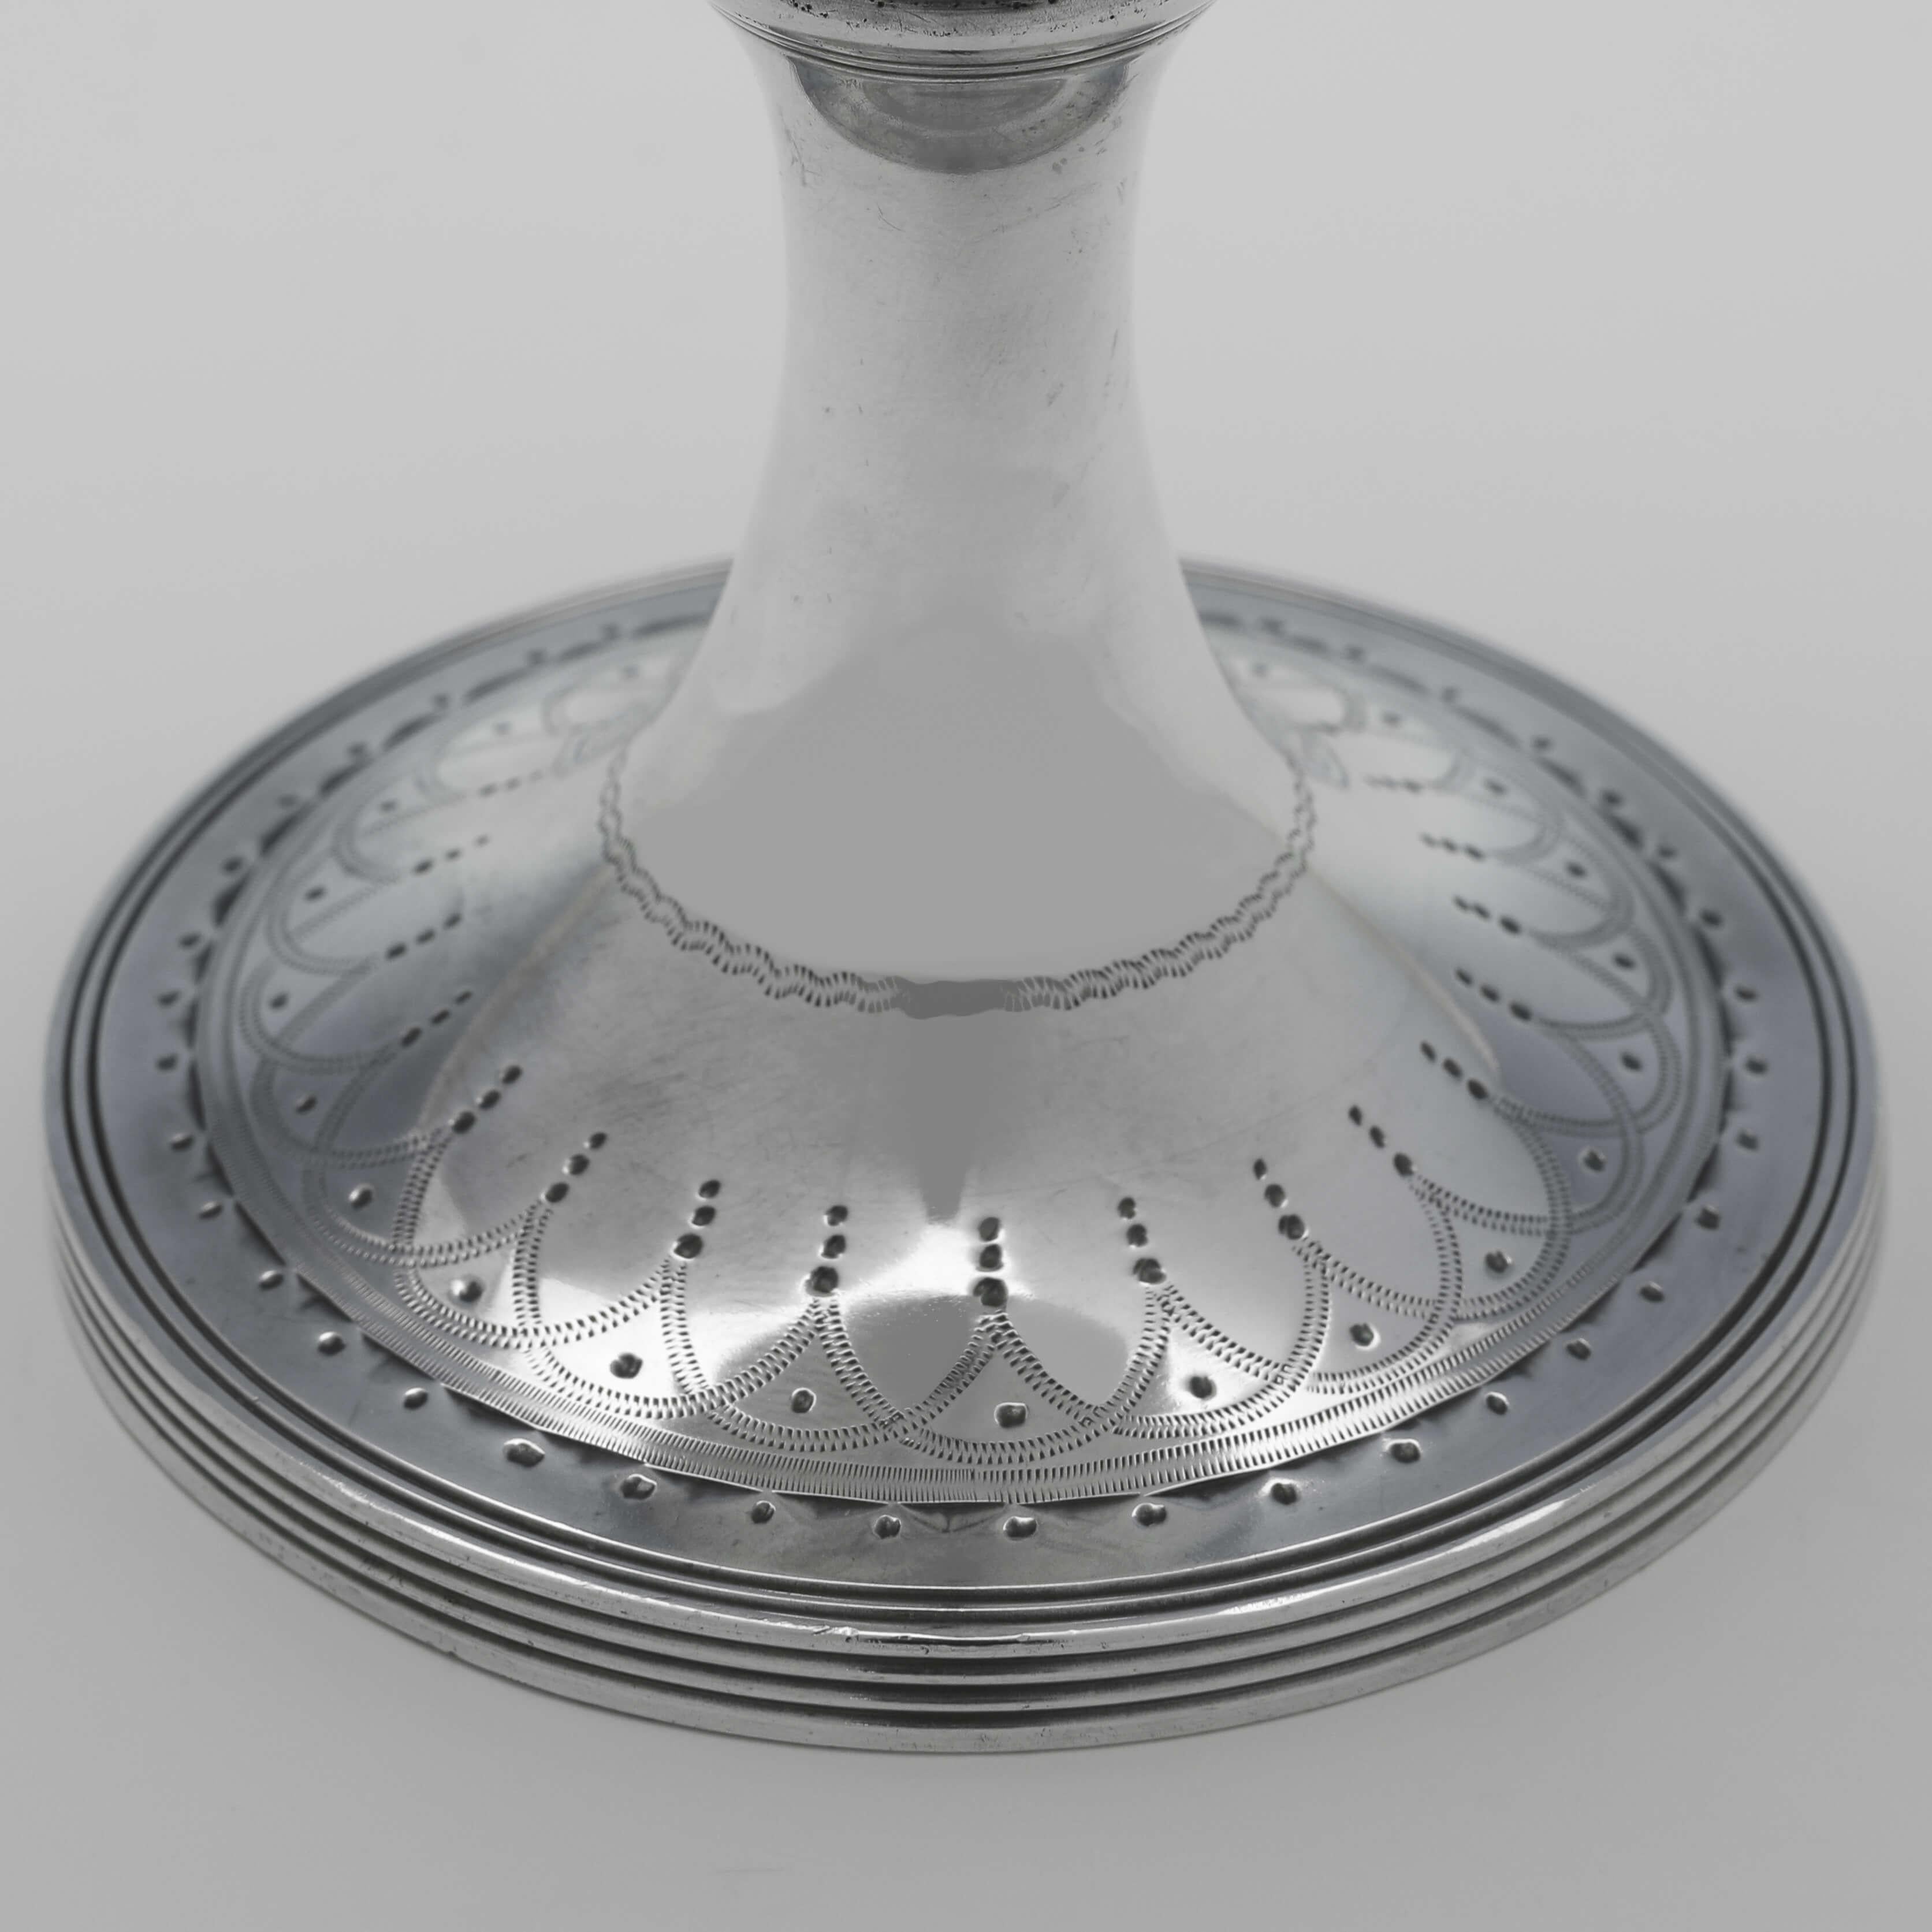 English Regency Period Antique Sterling Silver Goblet - London 1811 - P. & W. Bateman For Sale